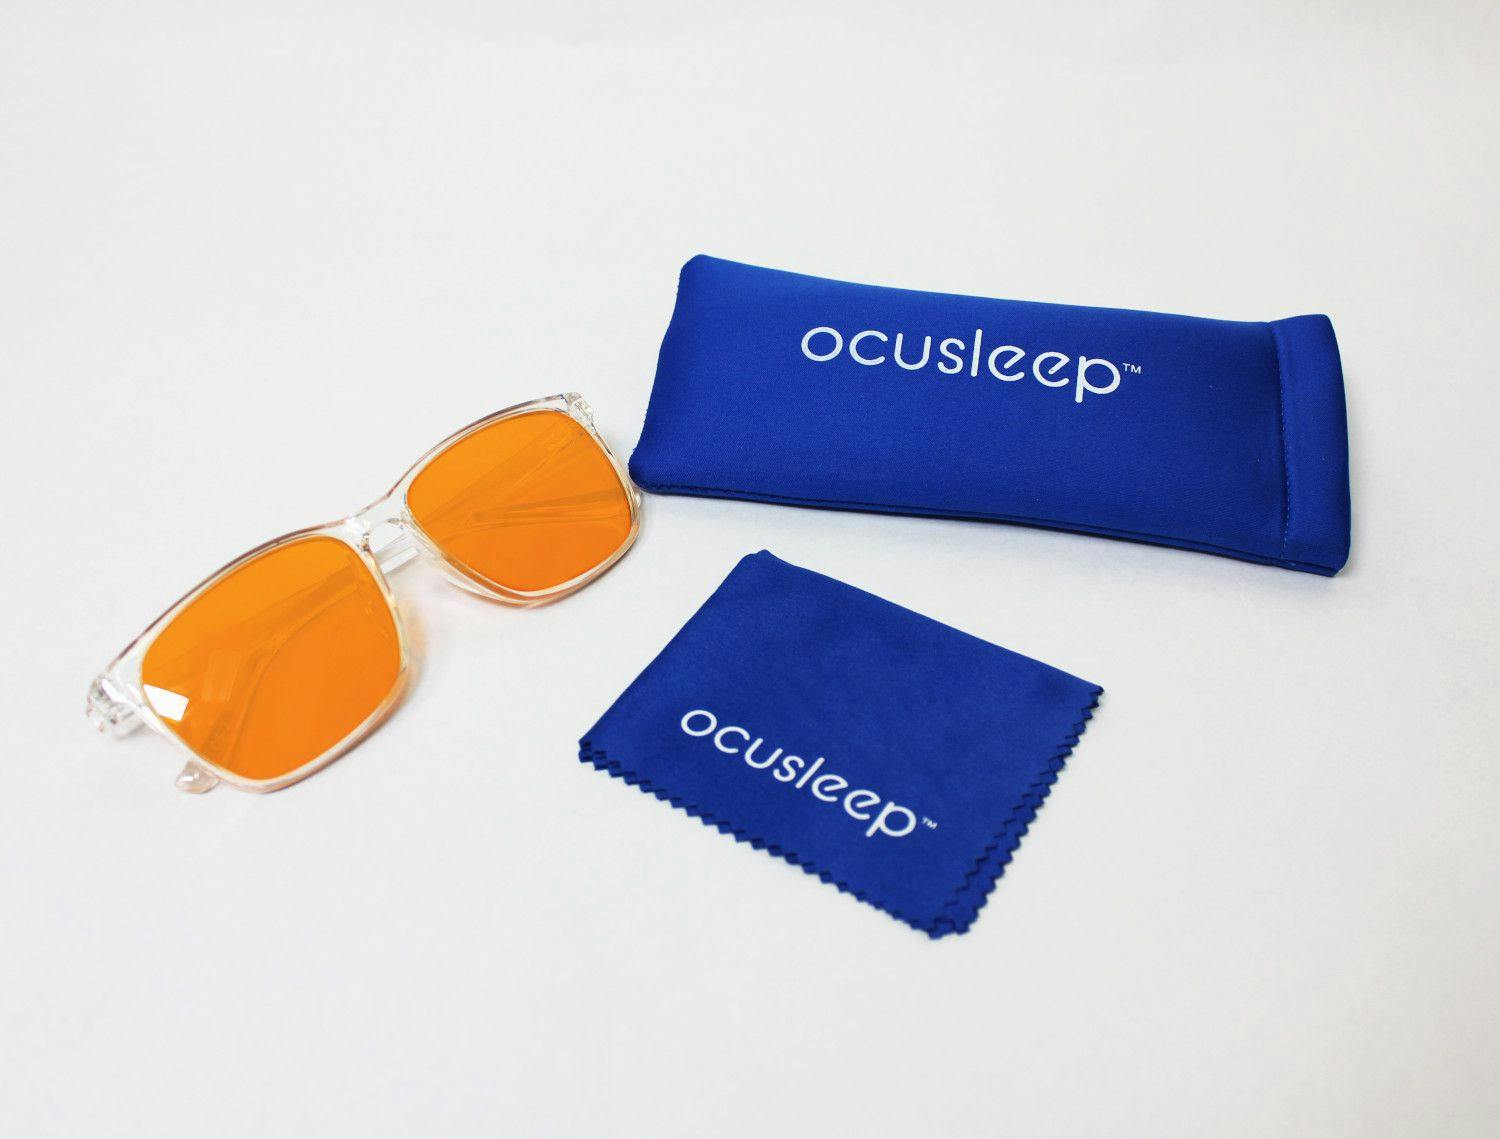 Eyeglasses optimize melatonin release by blocking blue and green light, promoting healthy sleep